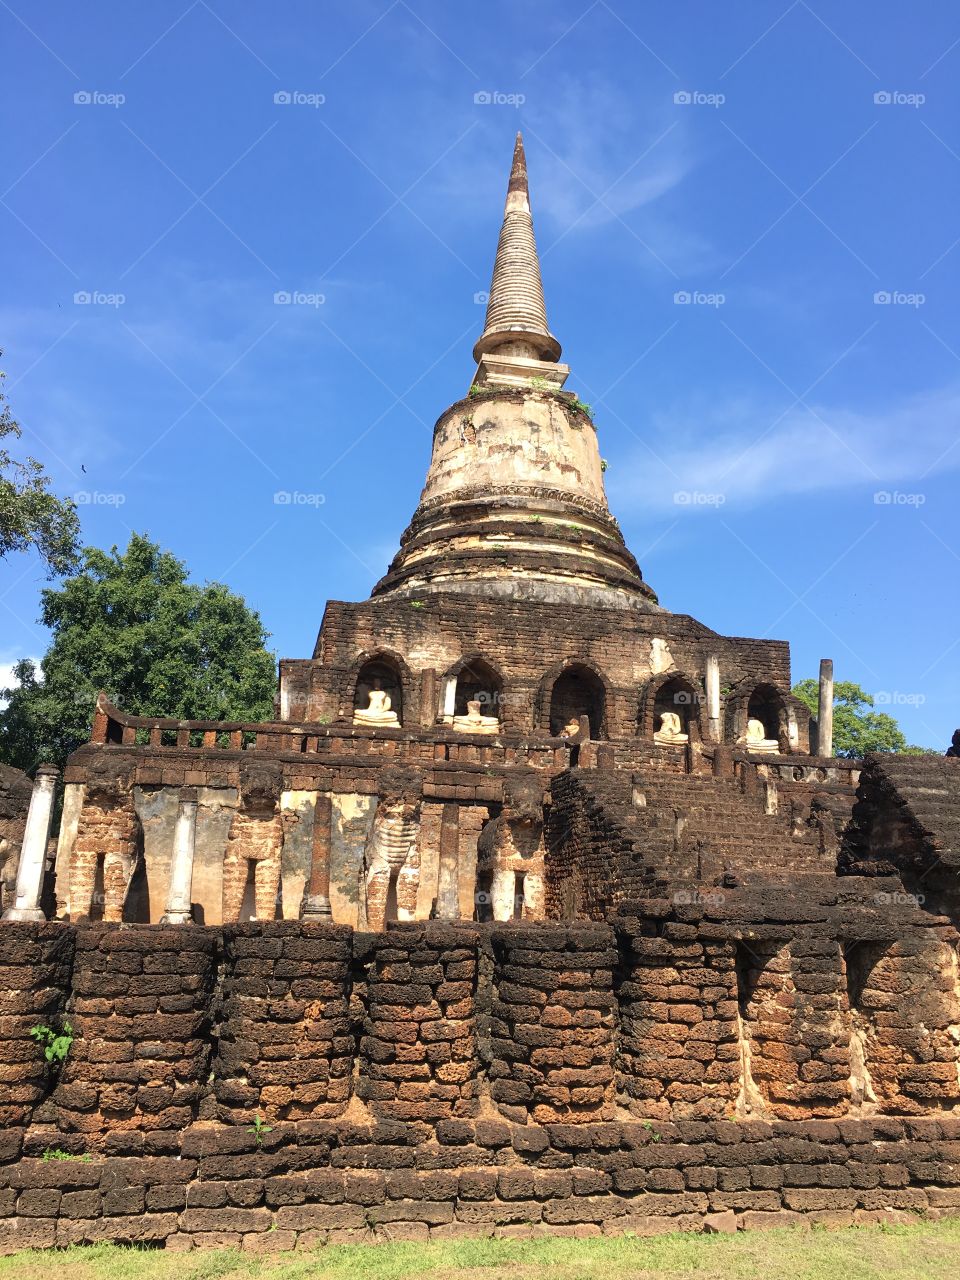 Wat chang lom elephant pagoda temple in Sukhothai, Thailand 